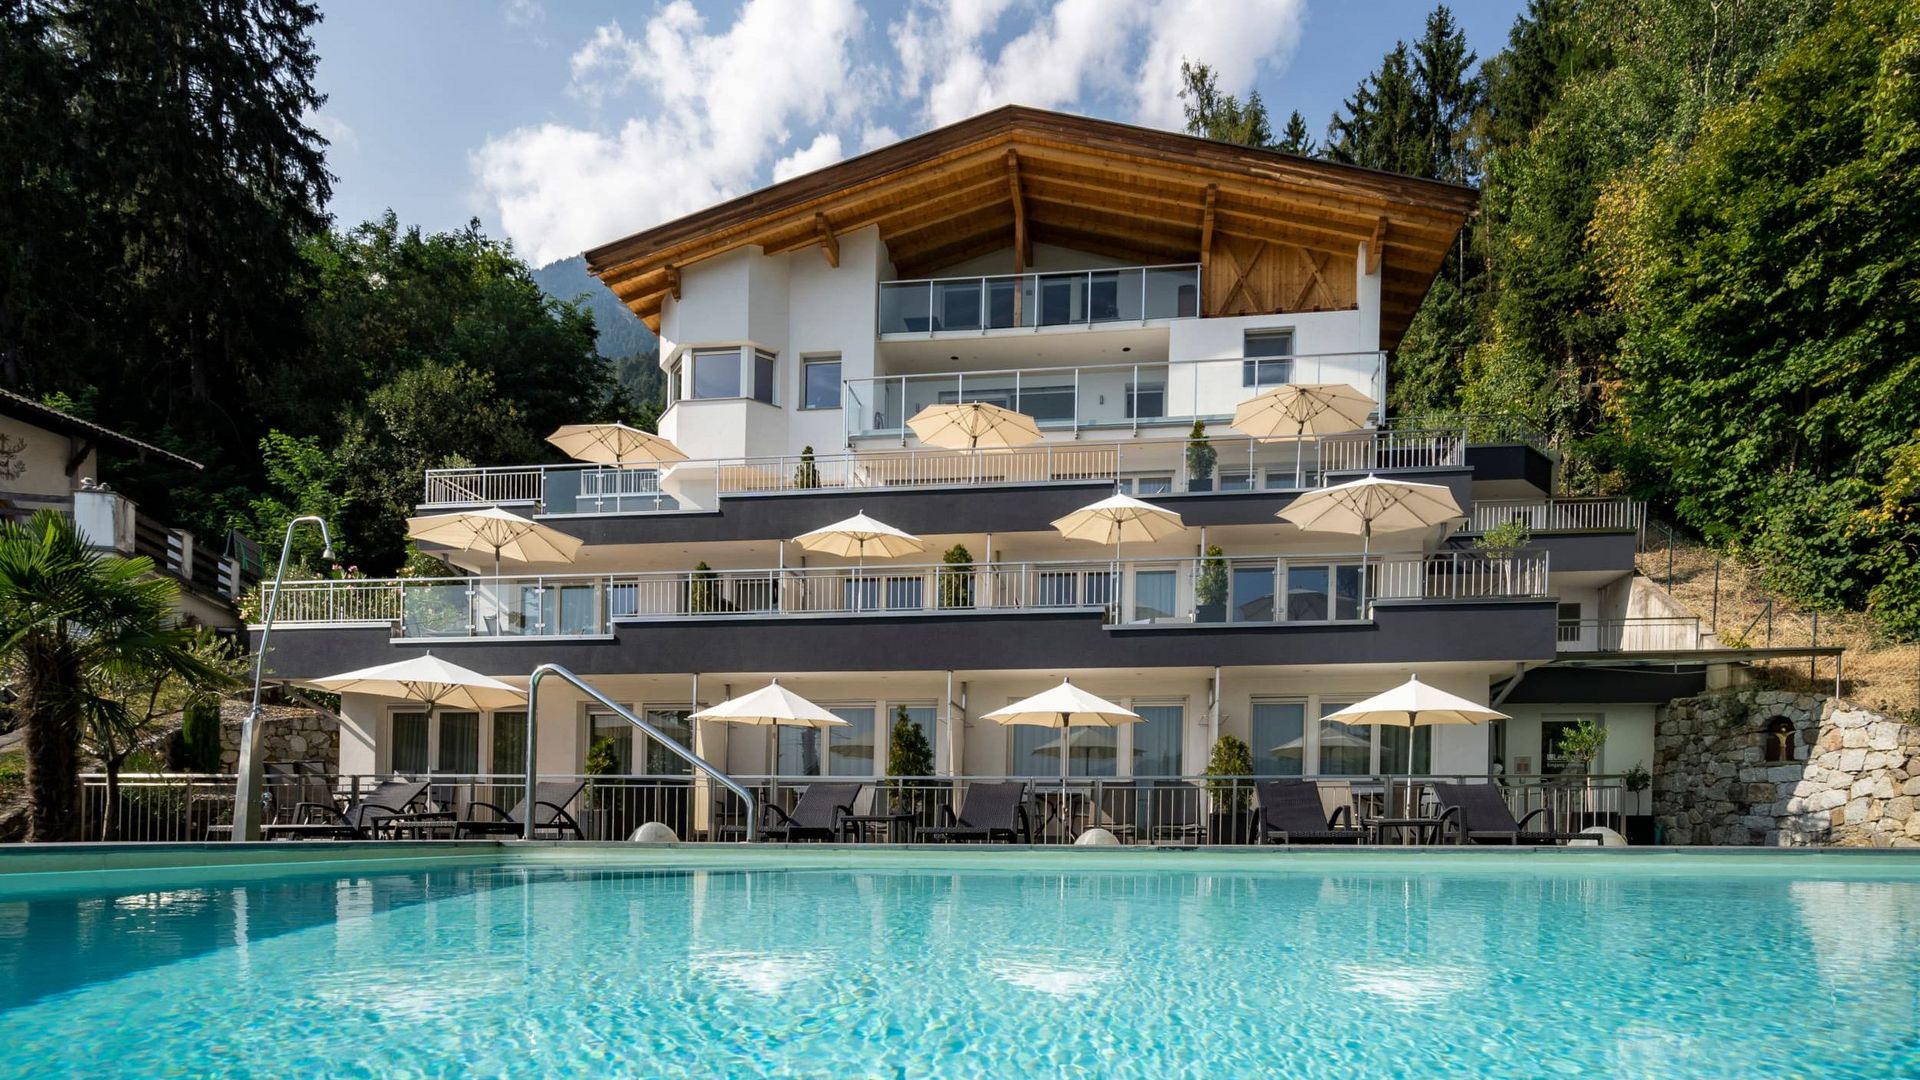 Holiday Dorf Tirol Residence Lechner Pool